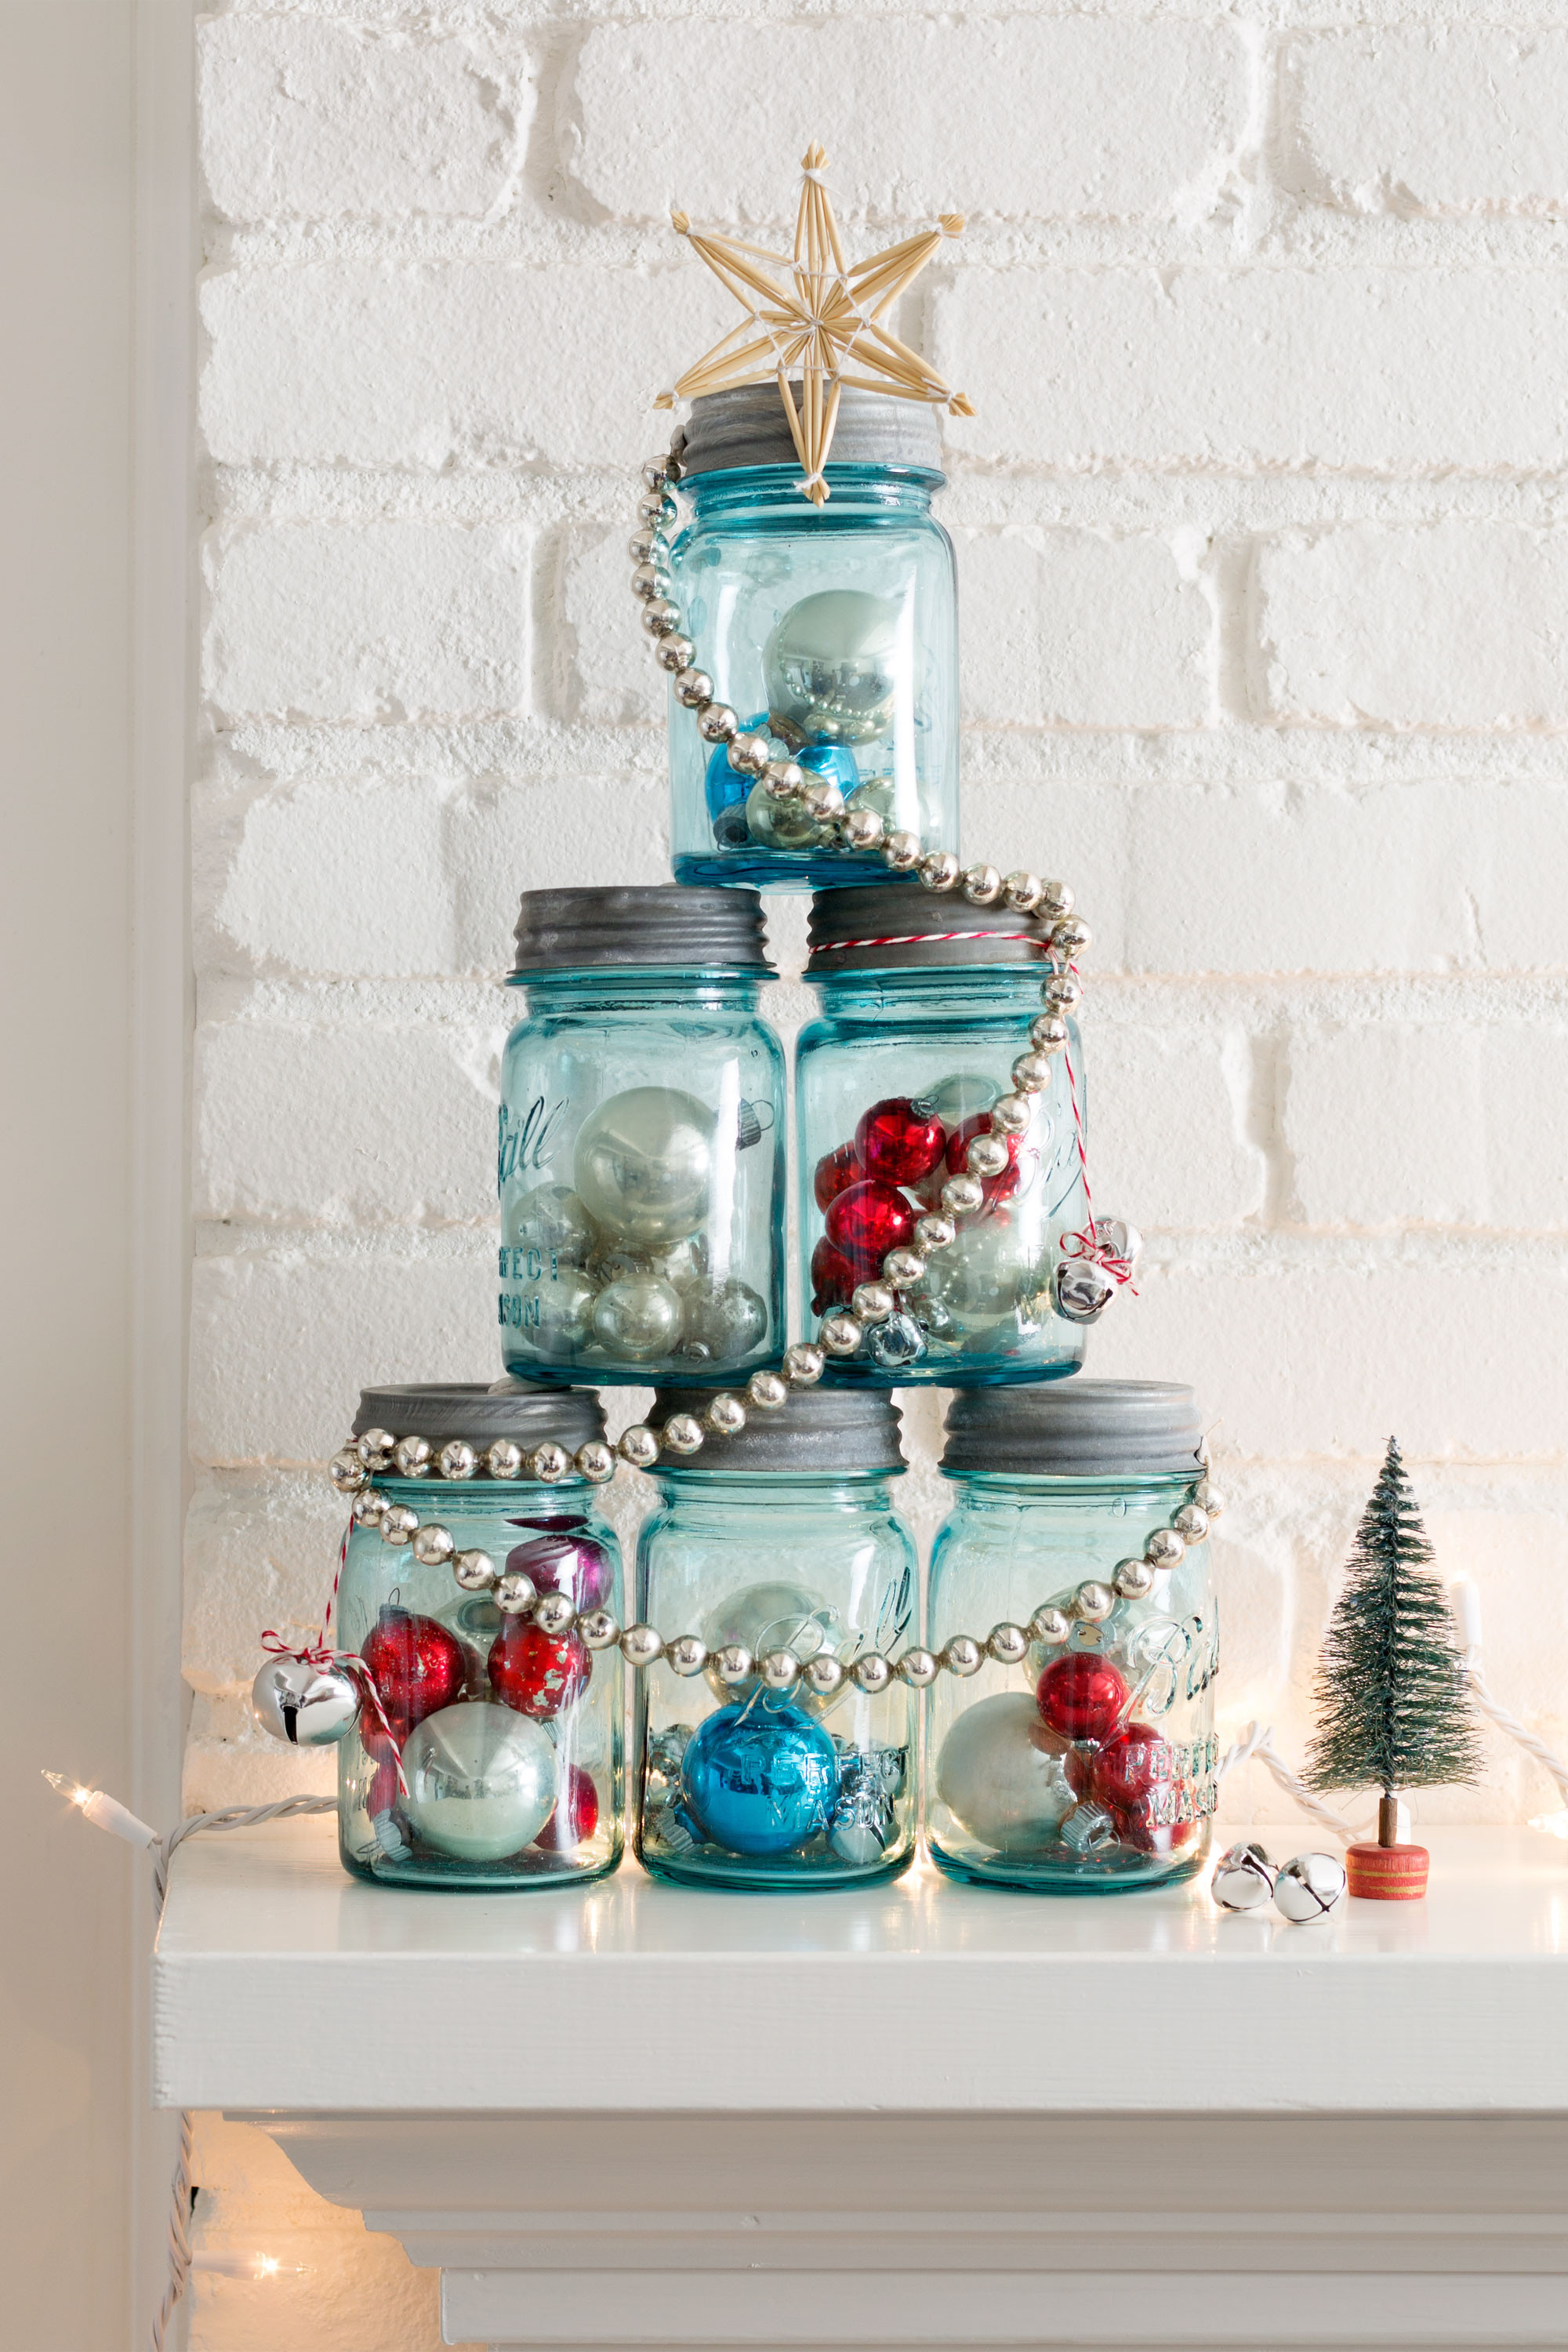 Best ideas about DIY Christmas Home Decor
. Save or Pin 37 DIY Homemade Christmas Decorations Christmas Decor Now.